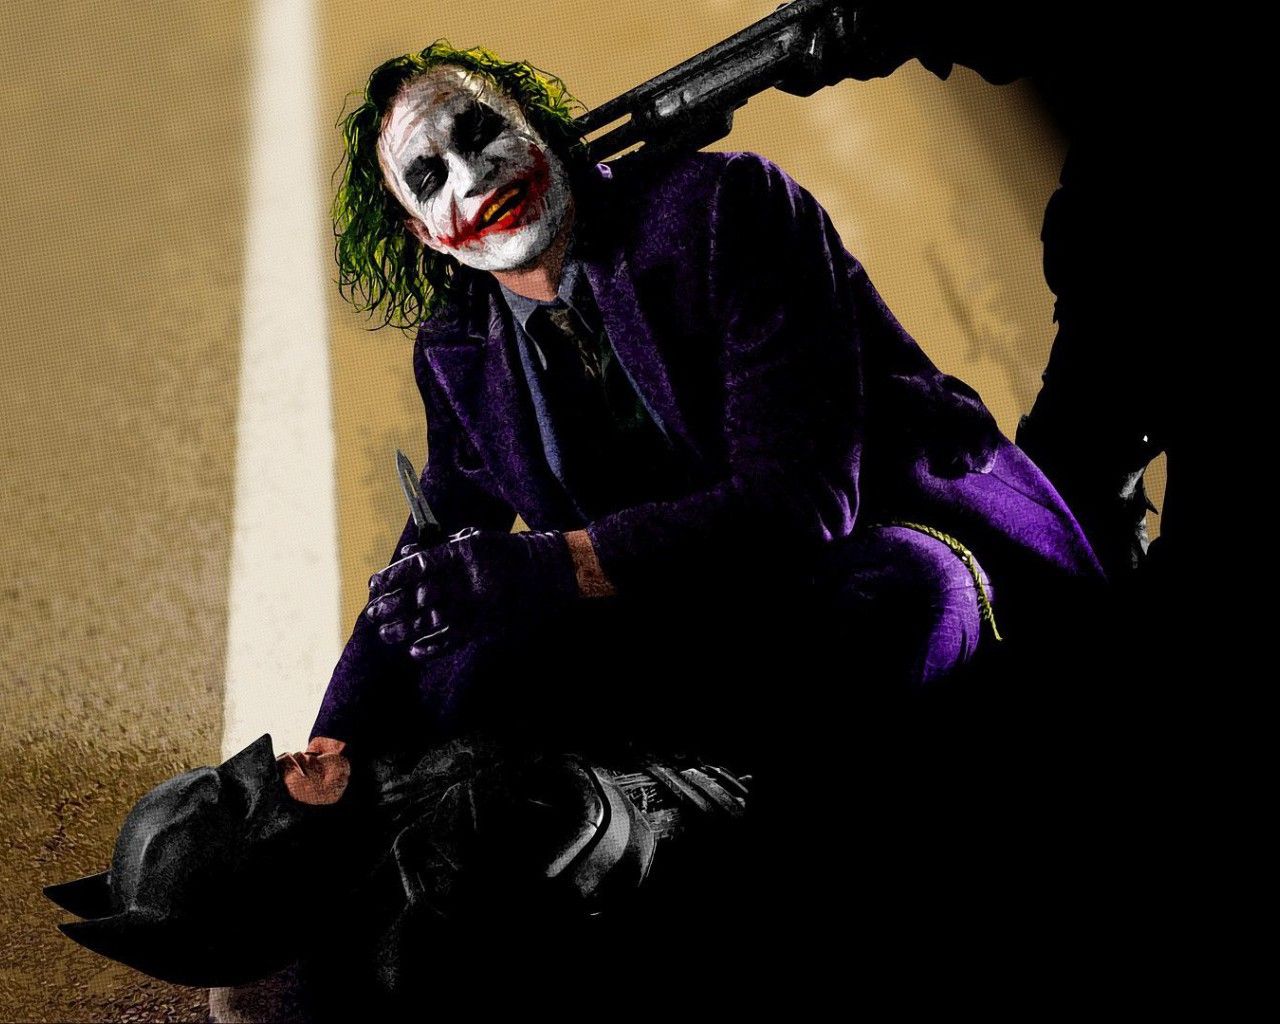 Download 1280x1024 The Joker fighting Batman in The Dark Knight